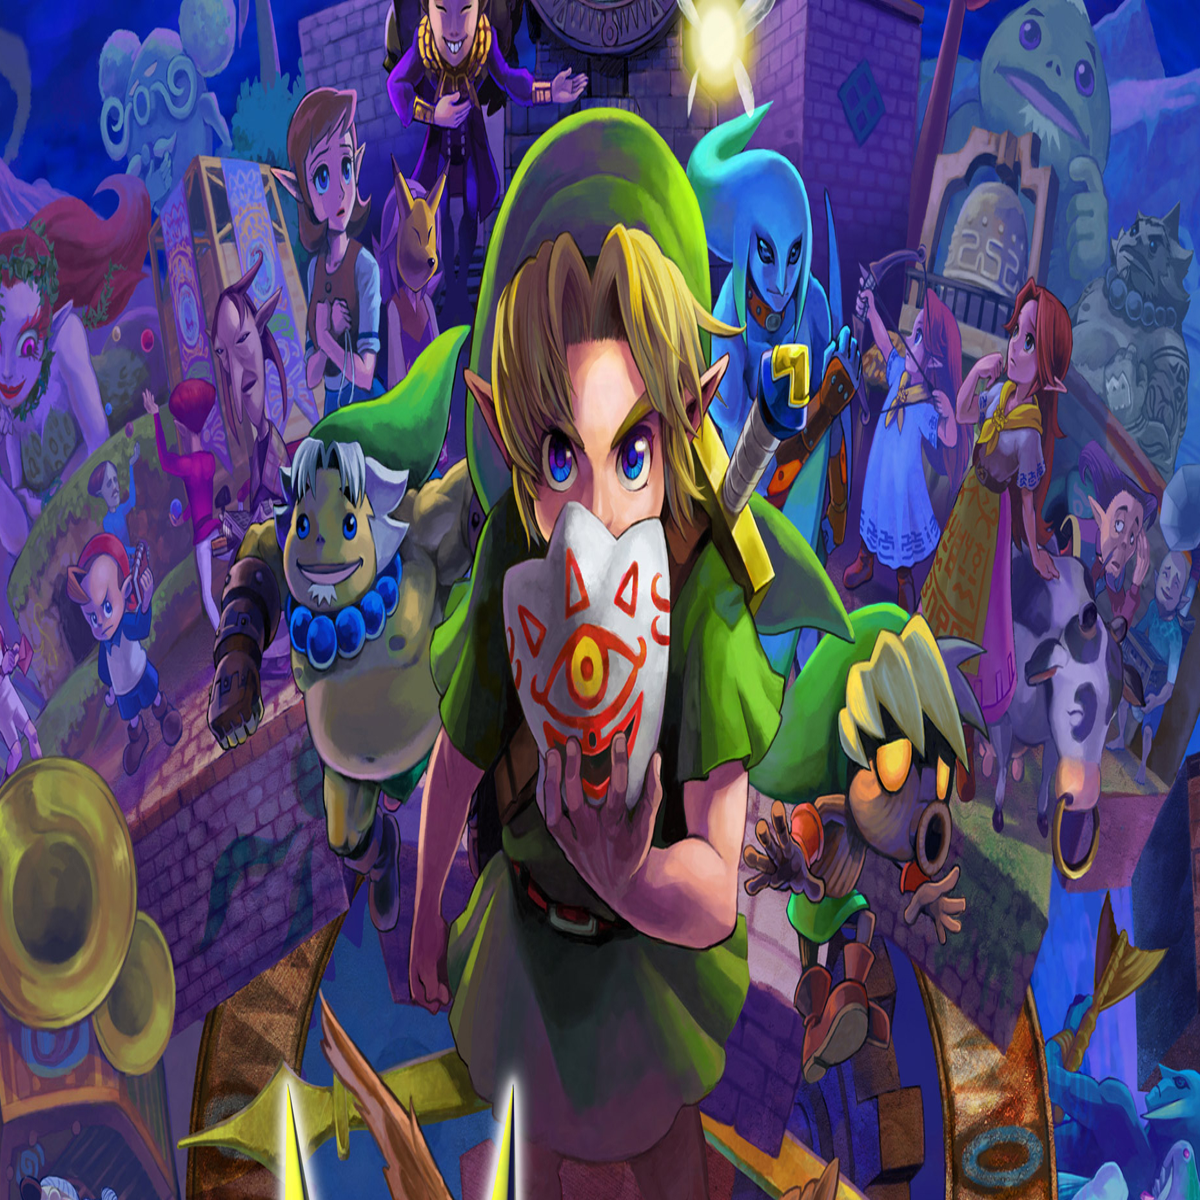 The Legend of Zelda: Majora's Mask Trailer - Nintendo 64